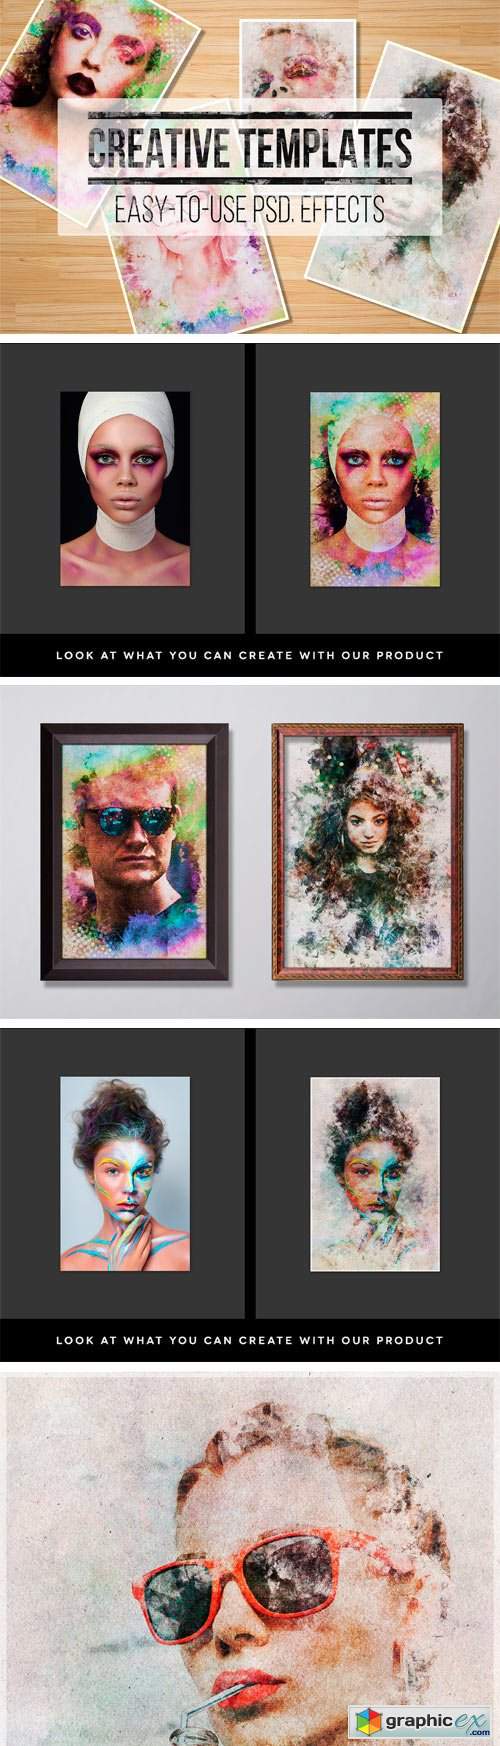 2 Creative Portrait Templates